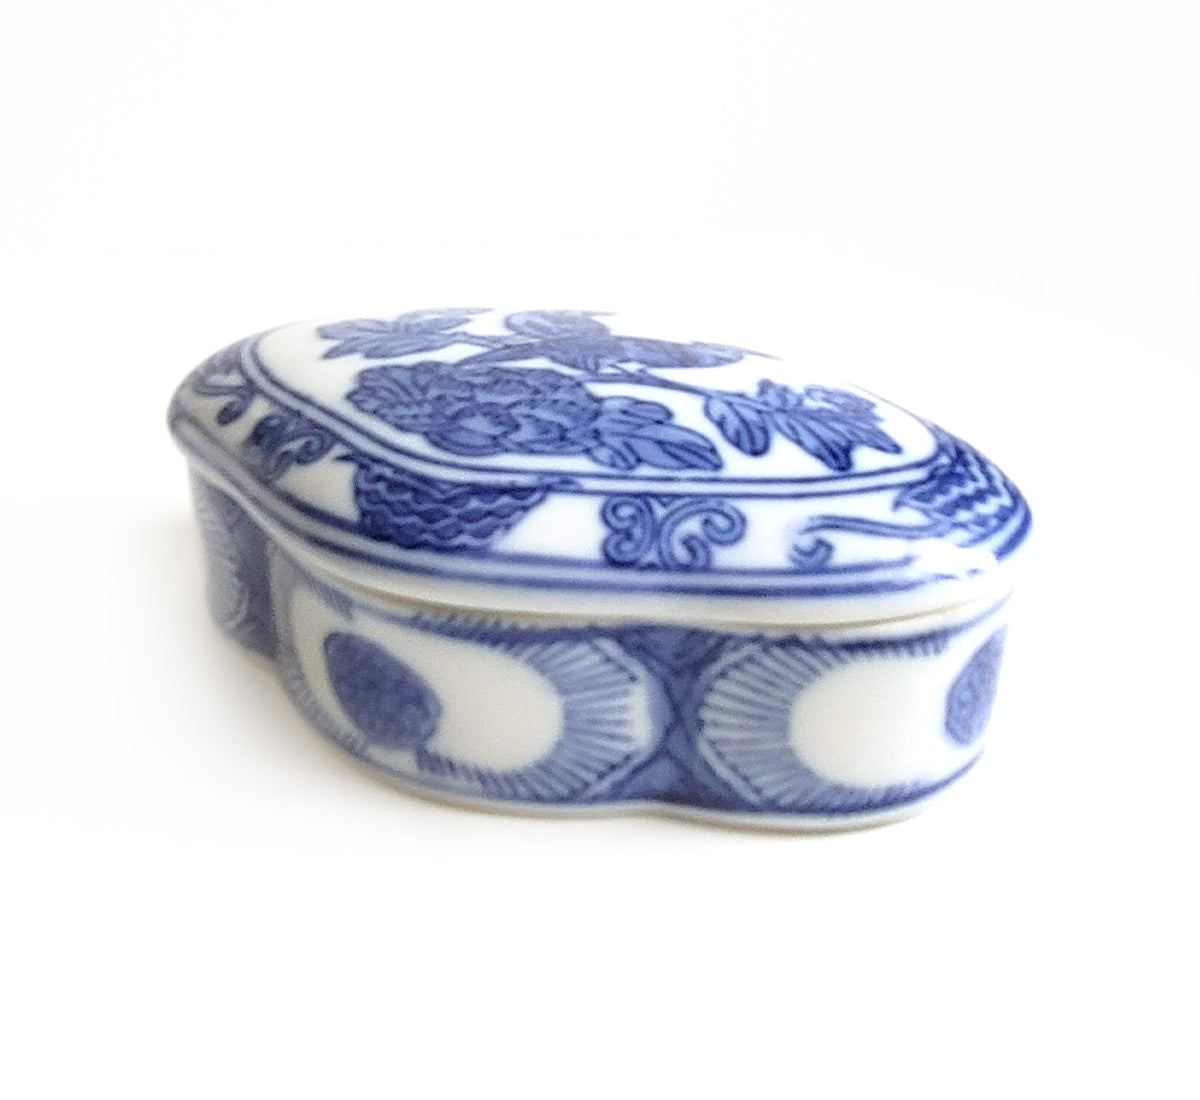 Blue & White Chinoiserie Handpainted Trinket Box / Jar - Love Birds